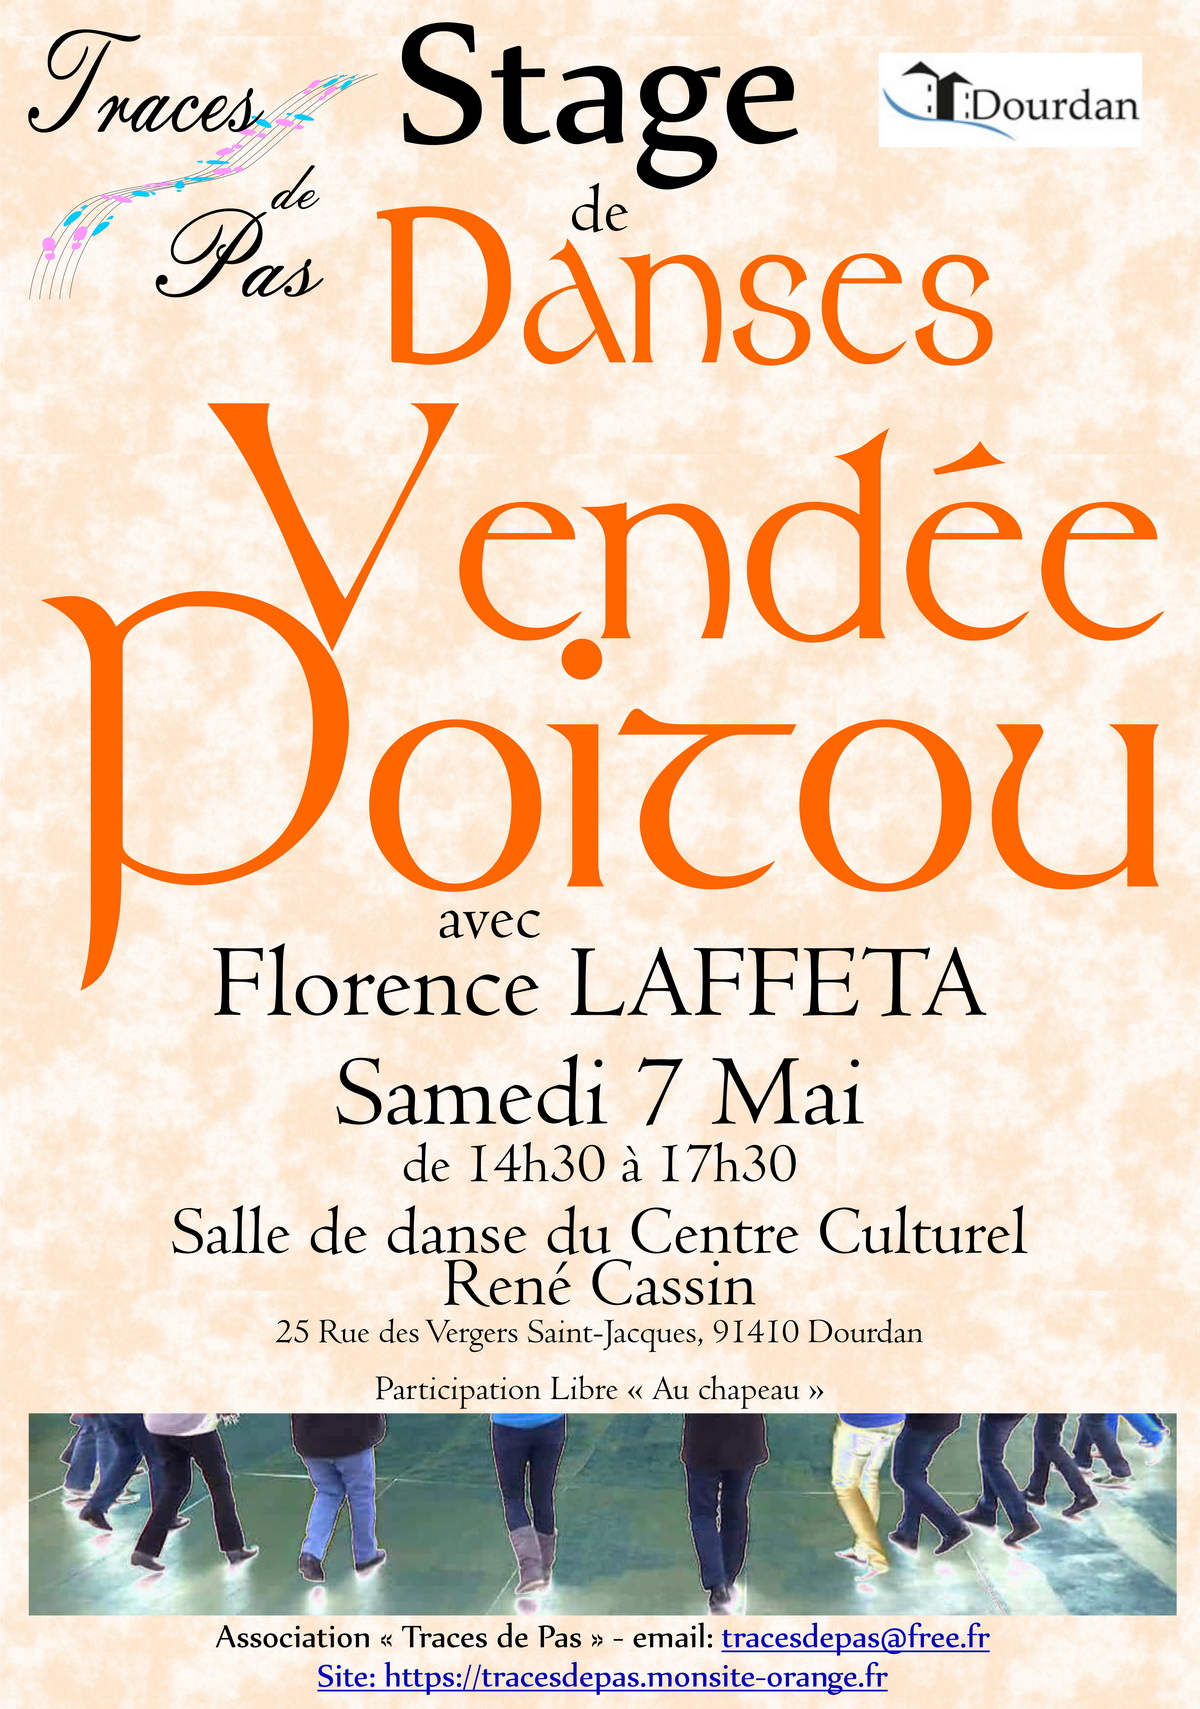 Stage de danses Vendée Poitou - 07 mai 2022 à Dourdan